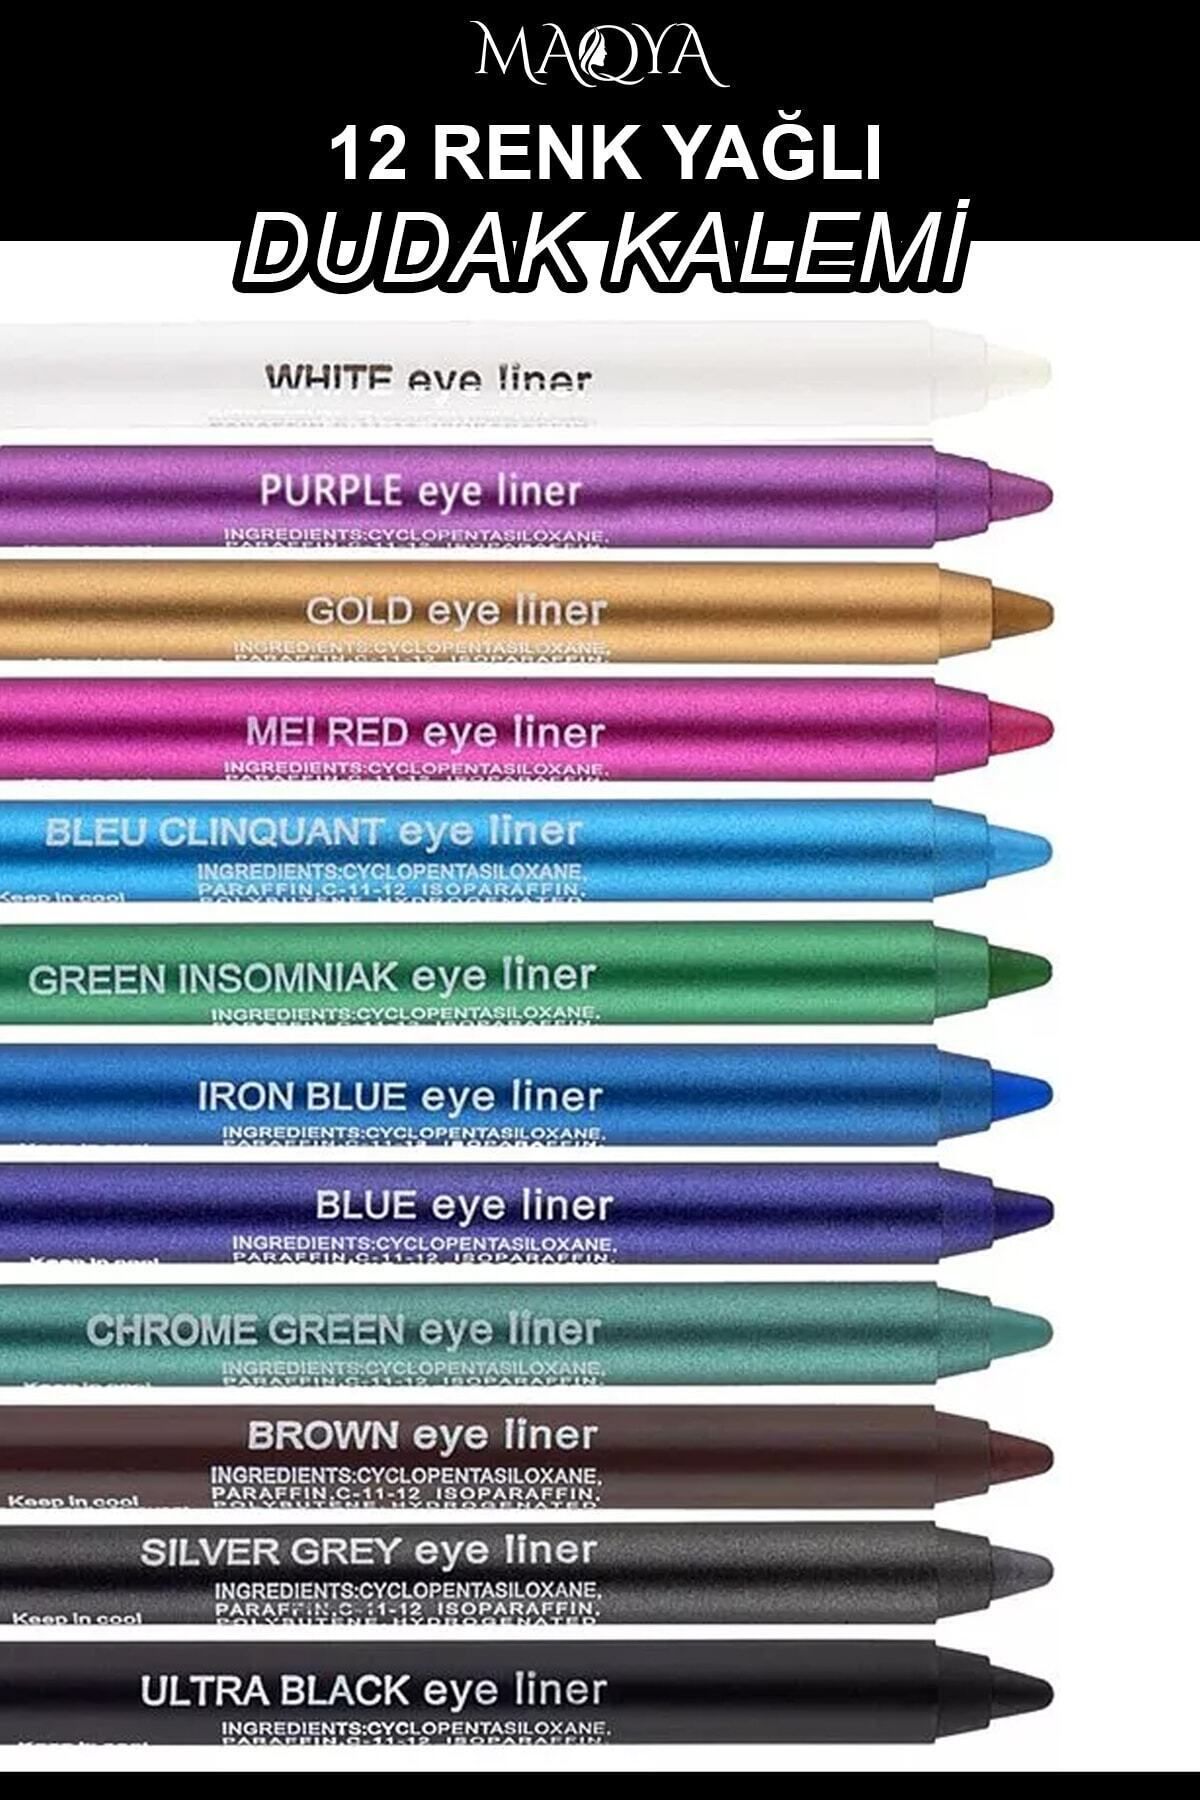 MAQYA Cosmetics 12 Renkli Neon Eyeliner Yağlı Göz Kalemi Seti